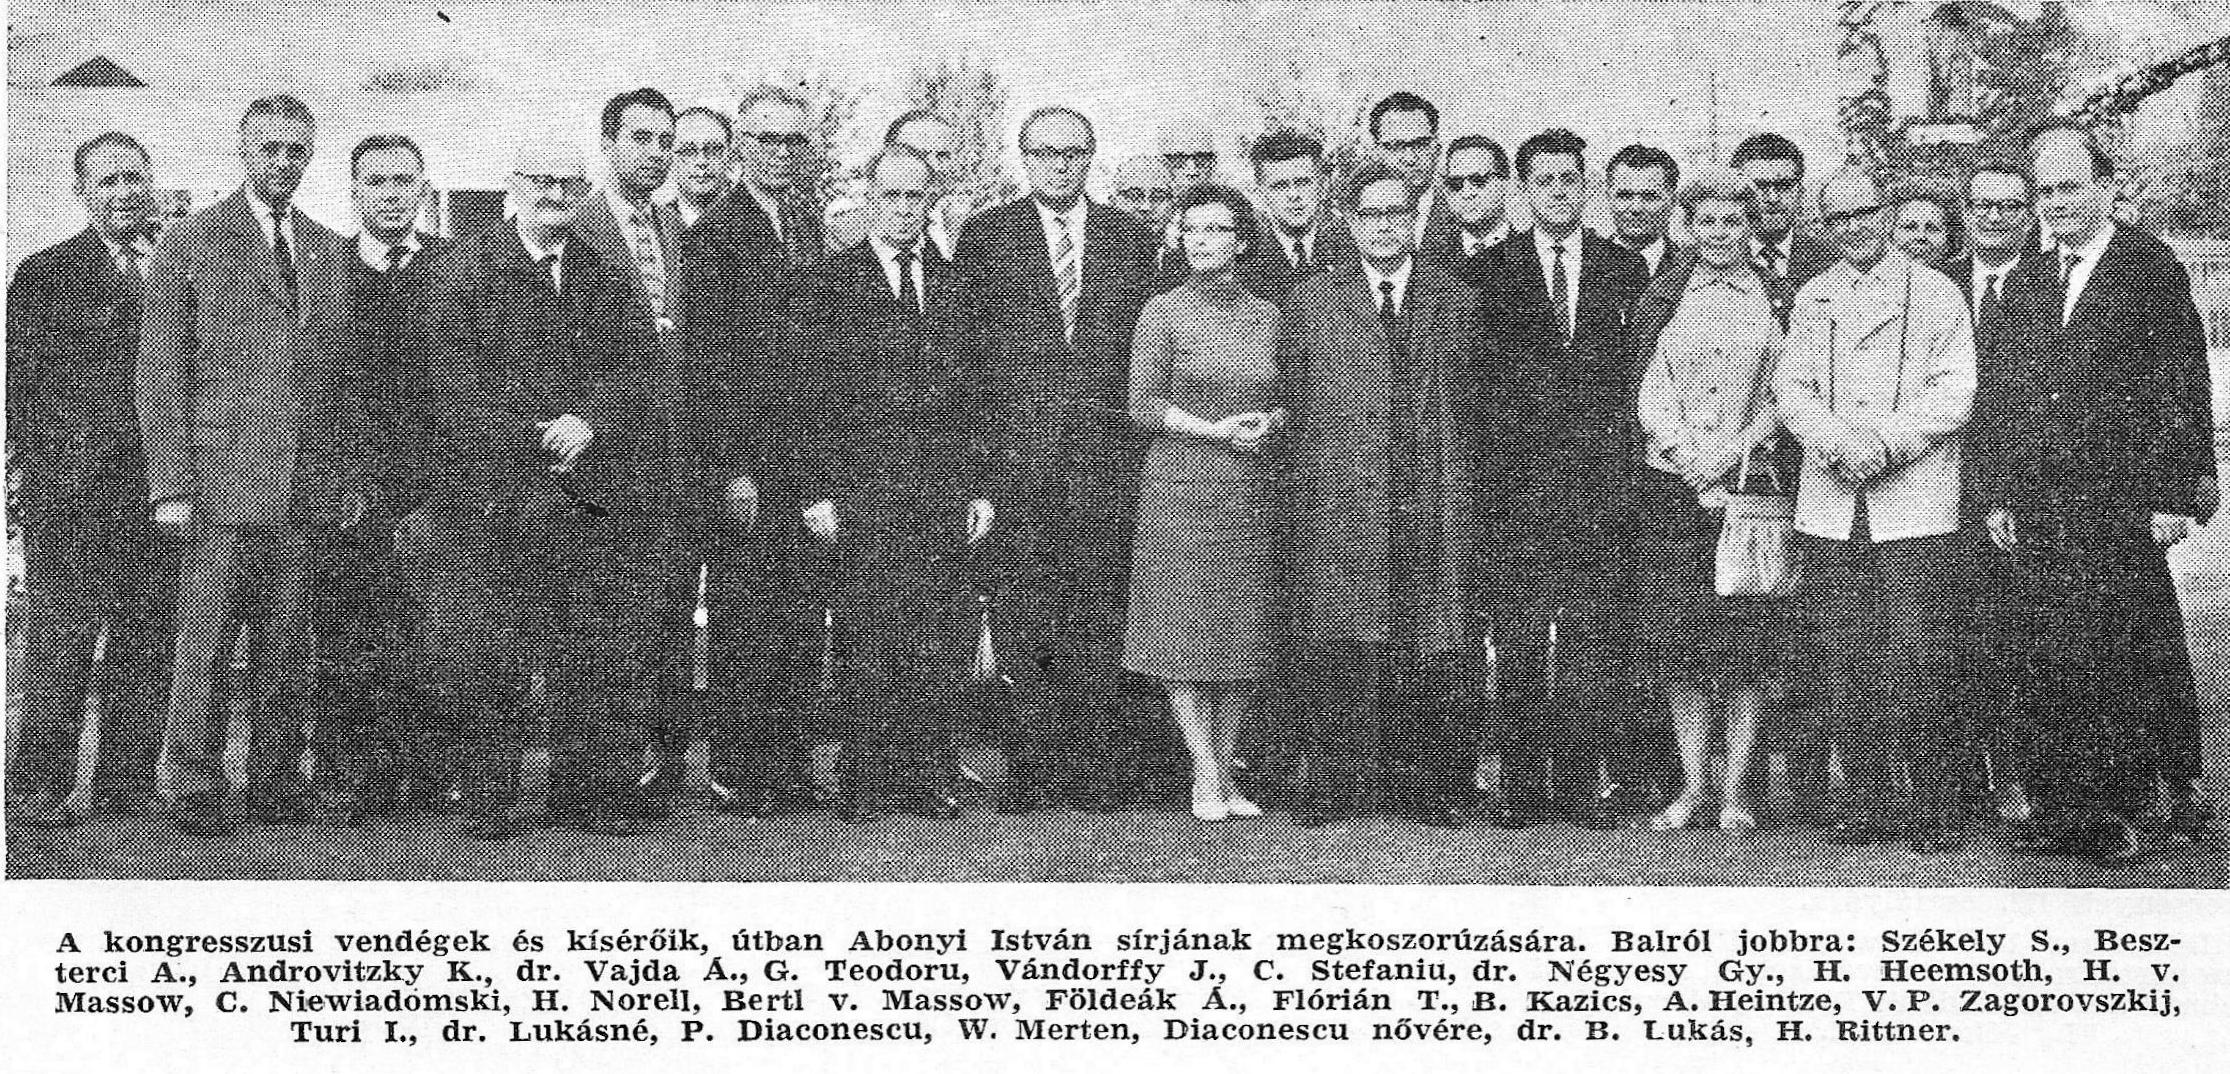 1965-iccf-congress-budapest-hungary